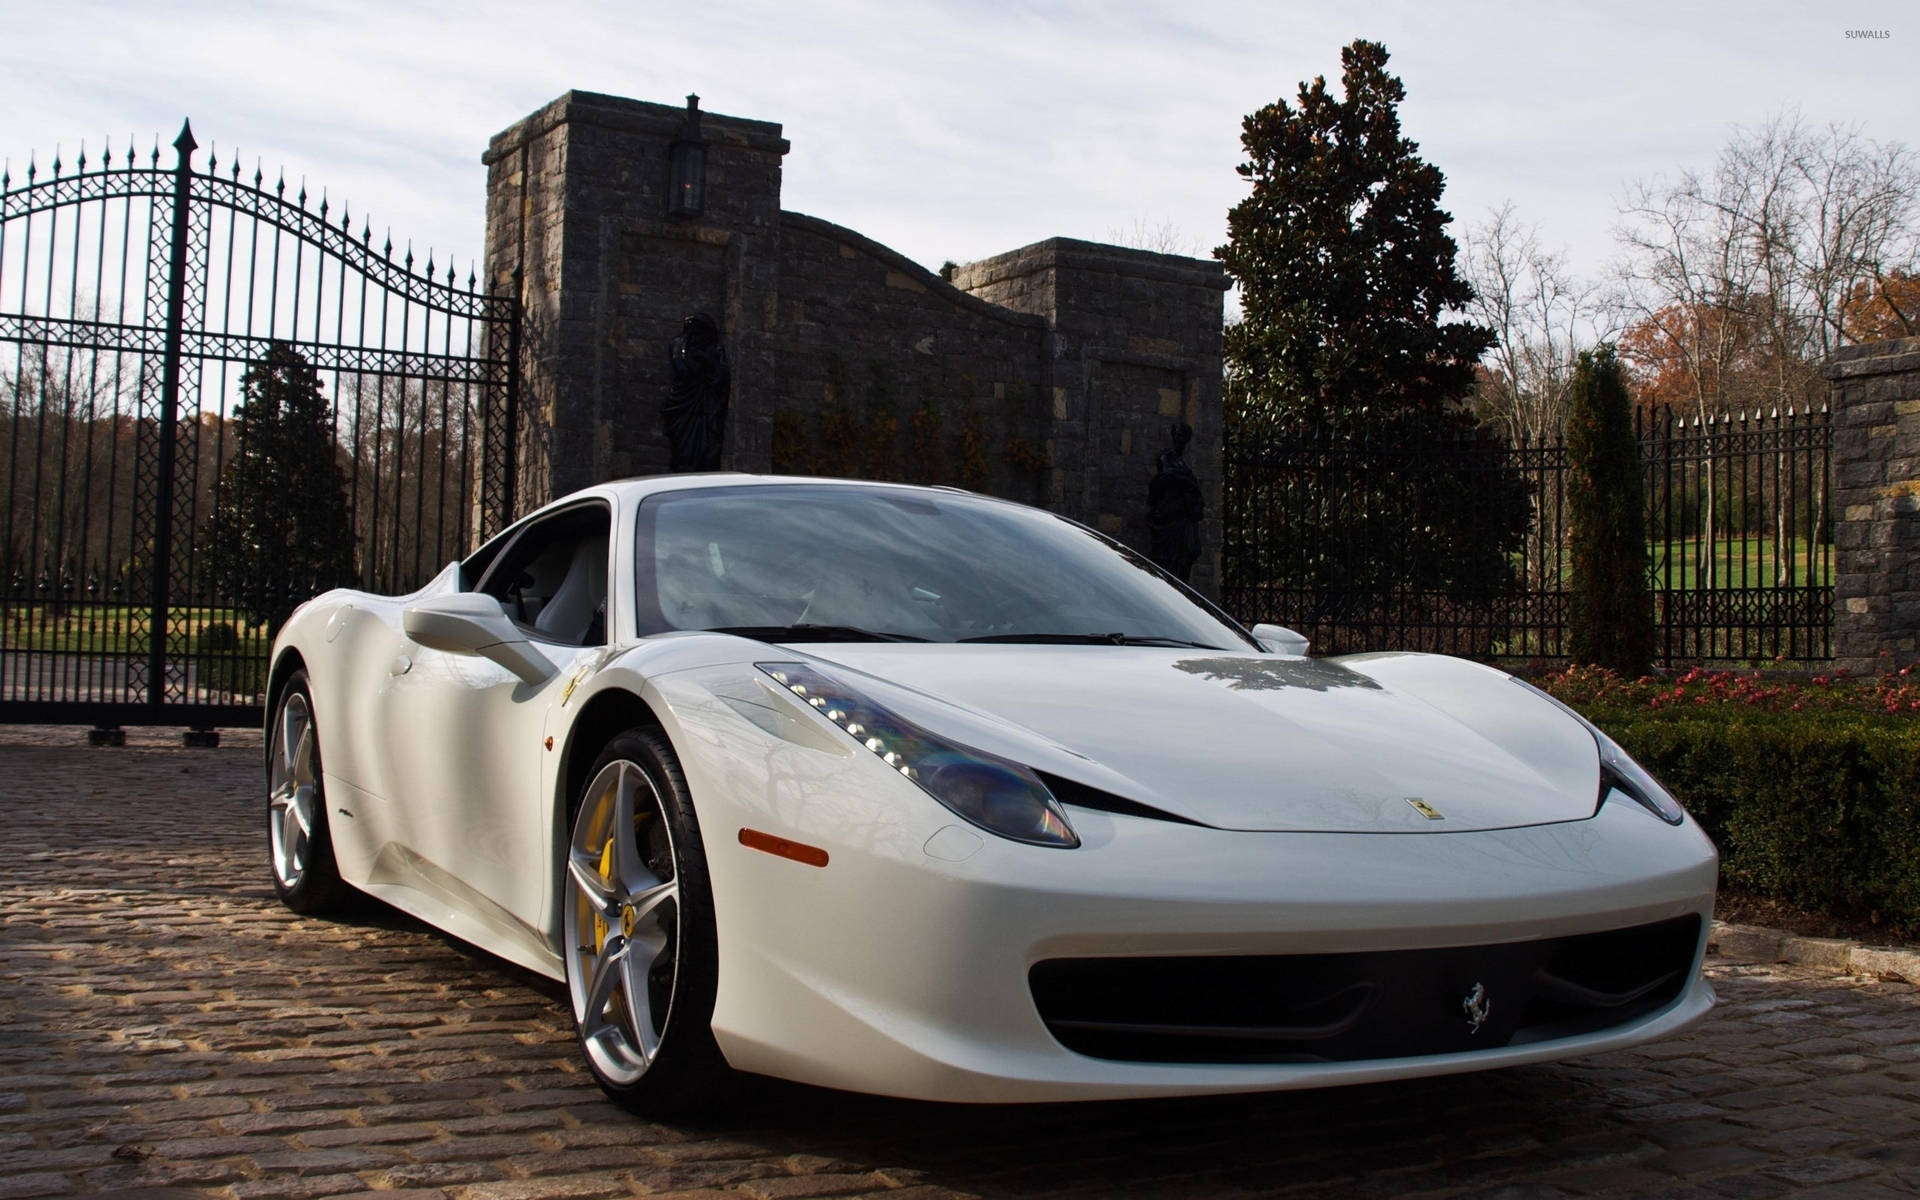 White Ferrari By The Gate